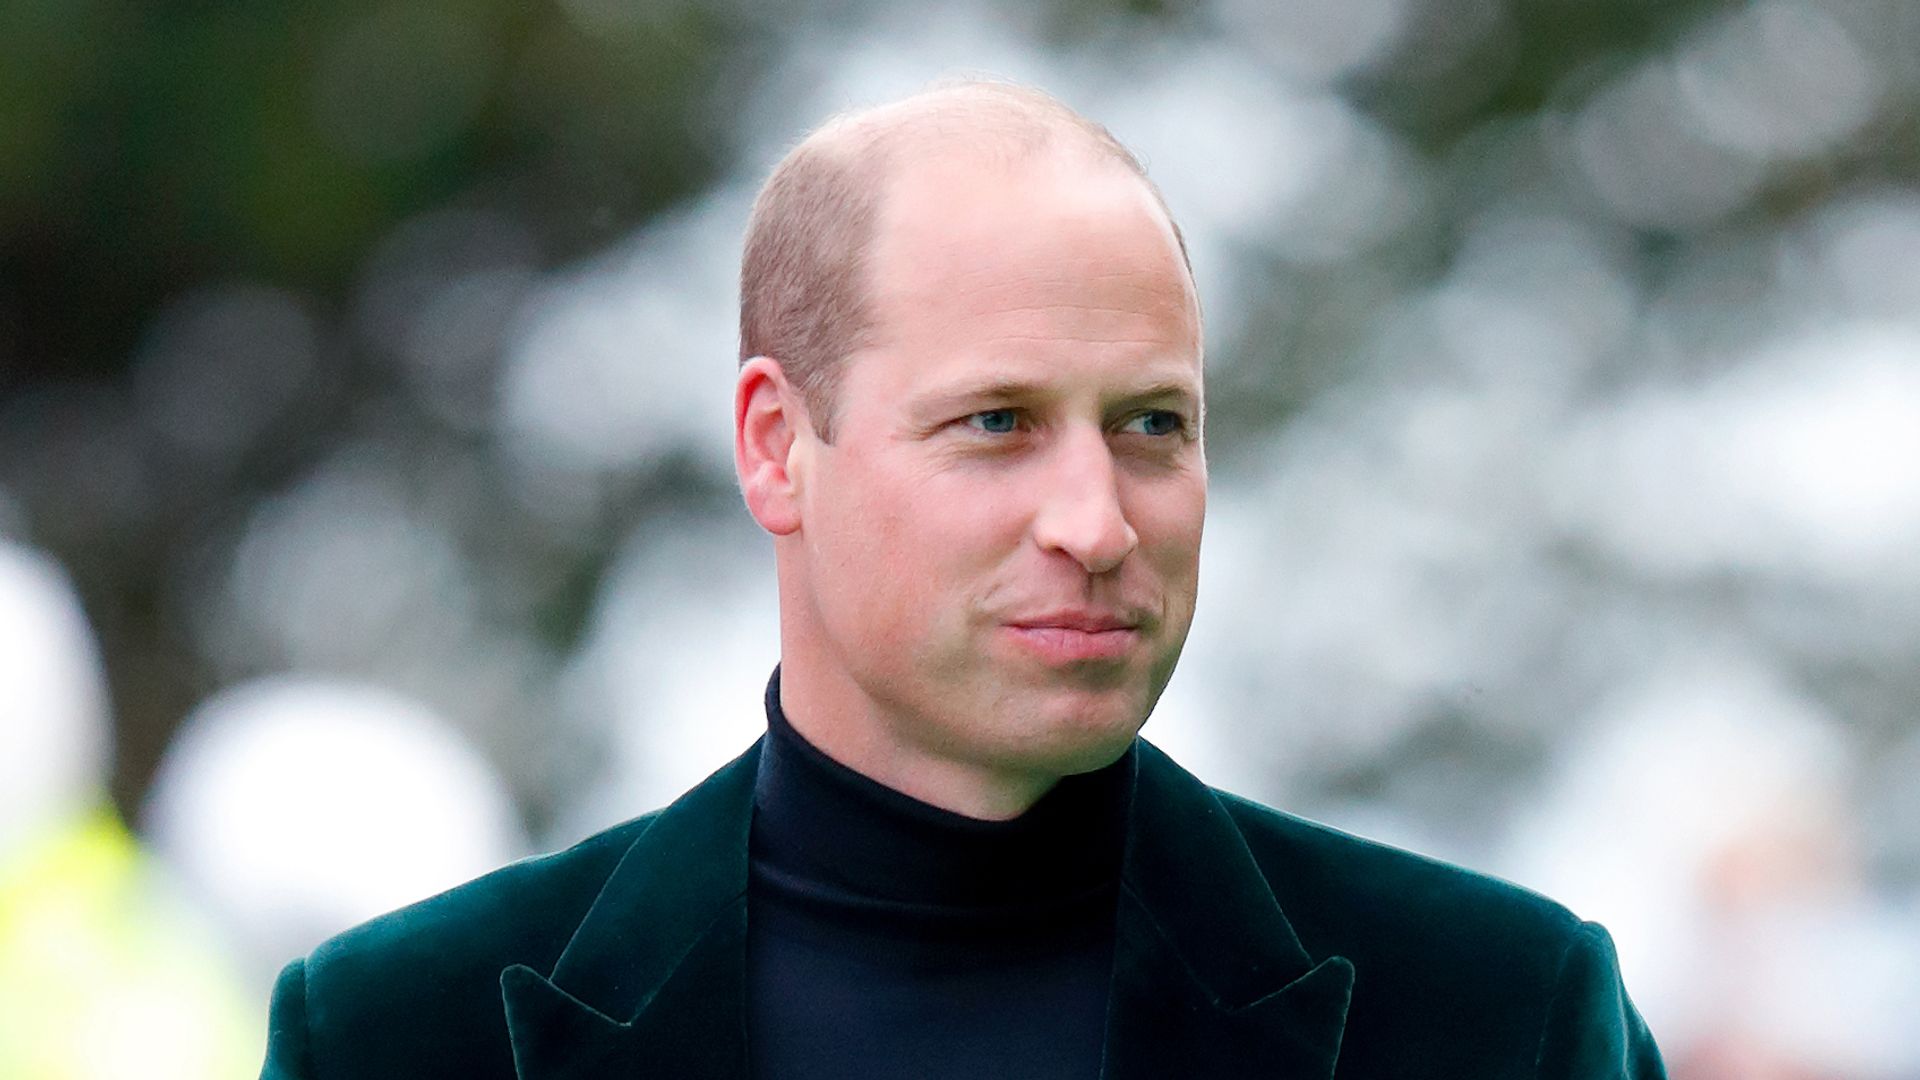 Prince William wearing green velvet blazer